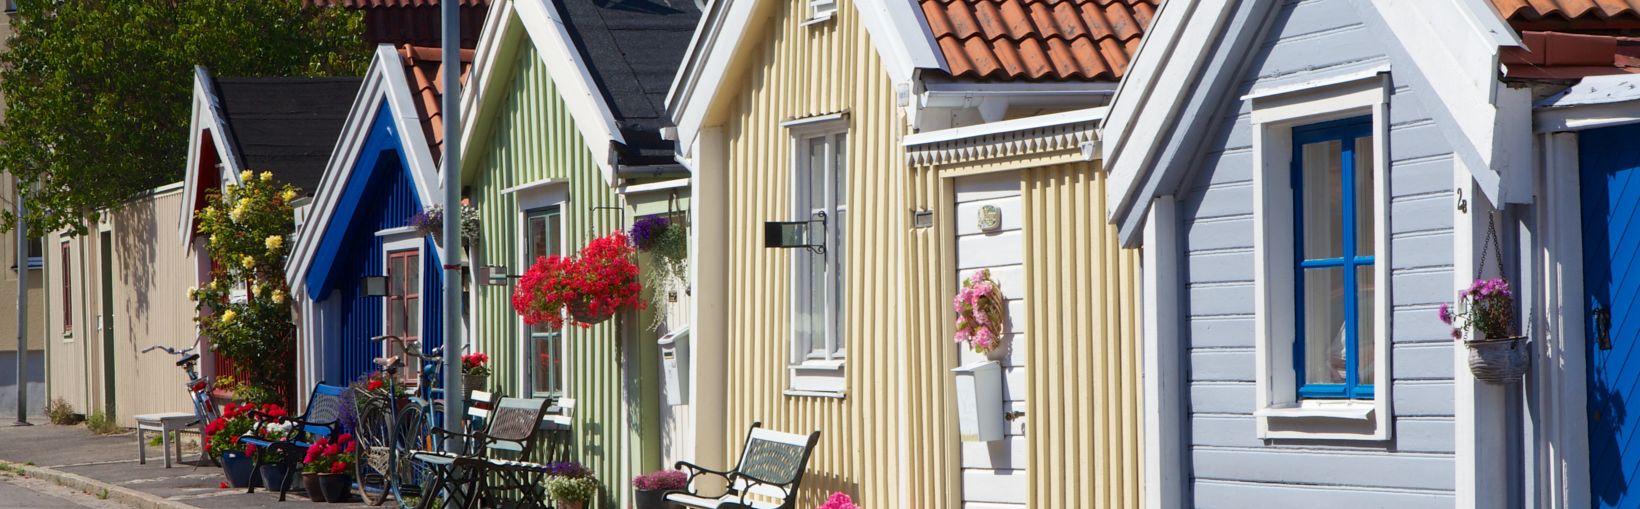 Colourful wooden, single storey buildings in Karlskrona, Sweden